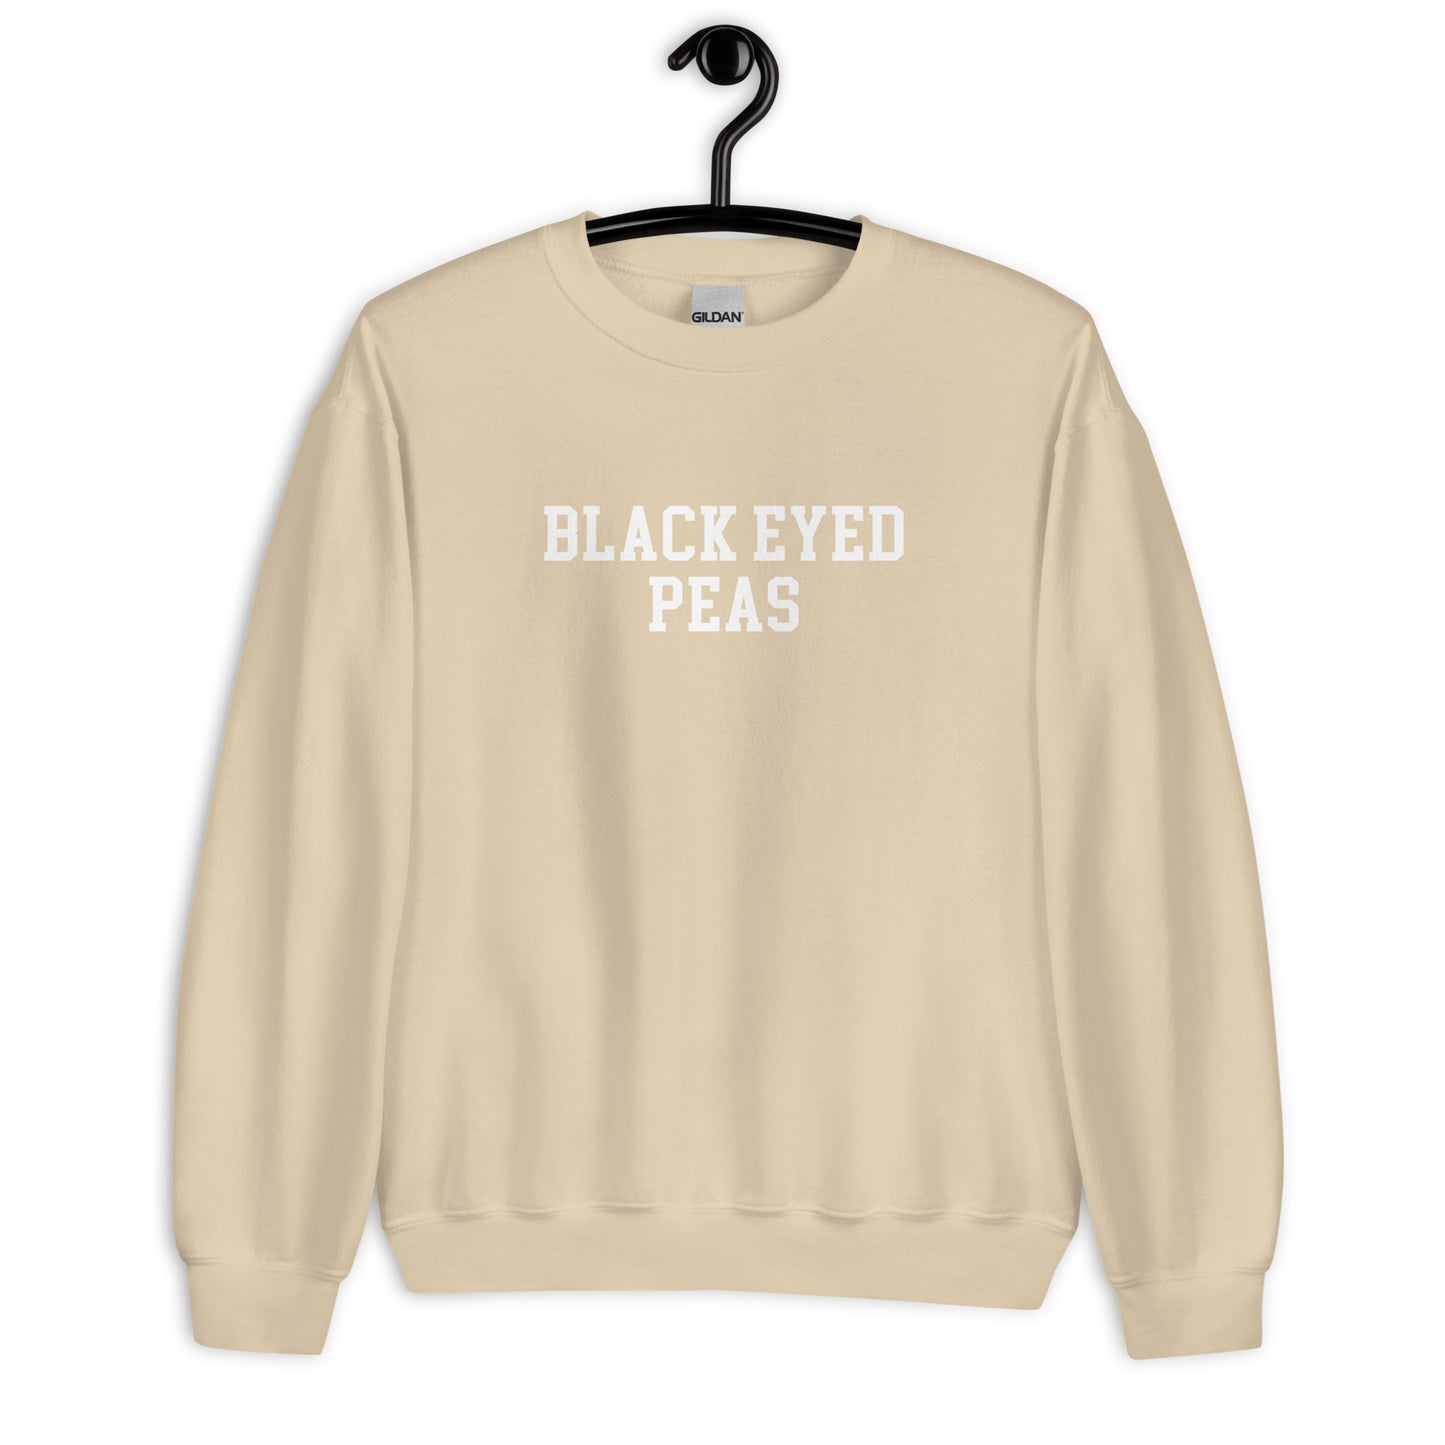 Black Eyed Peas Sweatshirt - Straight Font